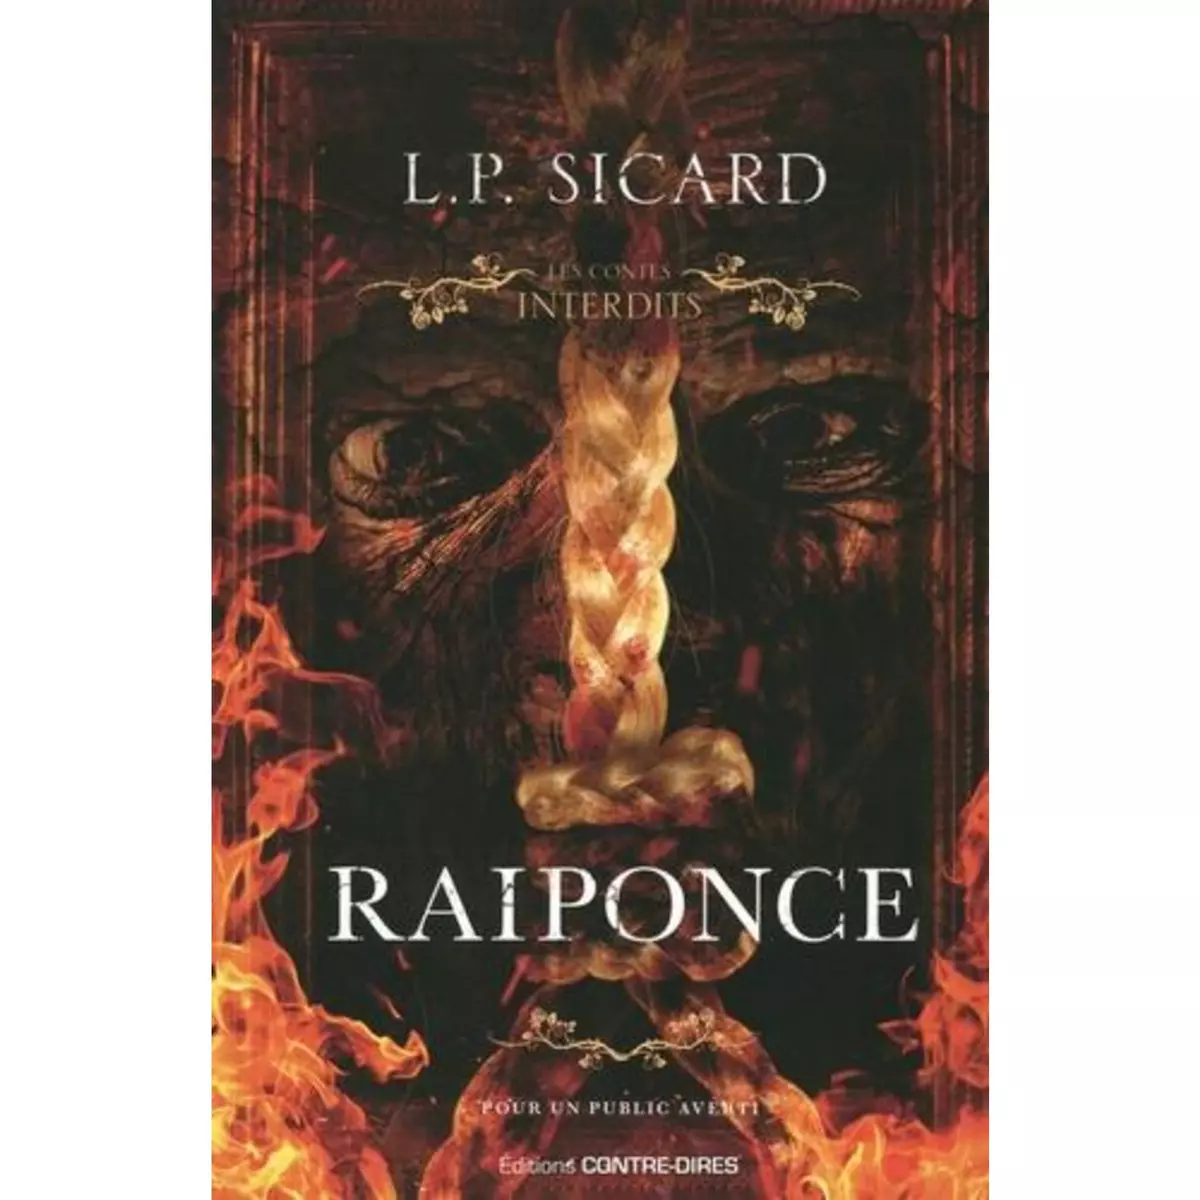  RAIPONCE, Sicard L.-P.